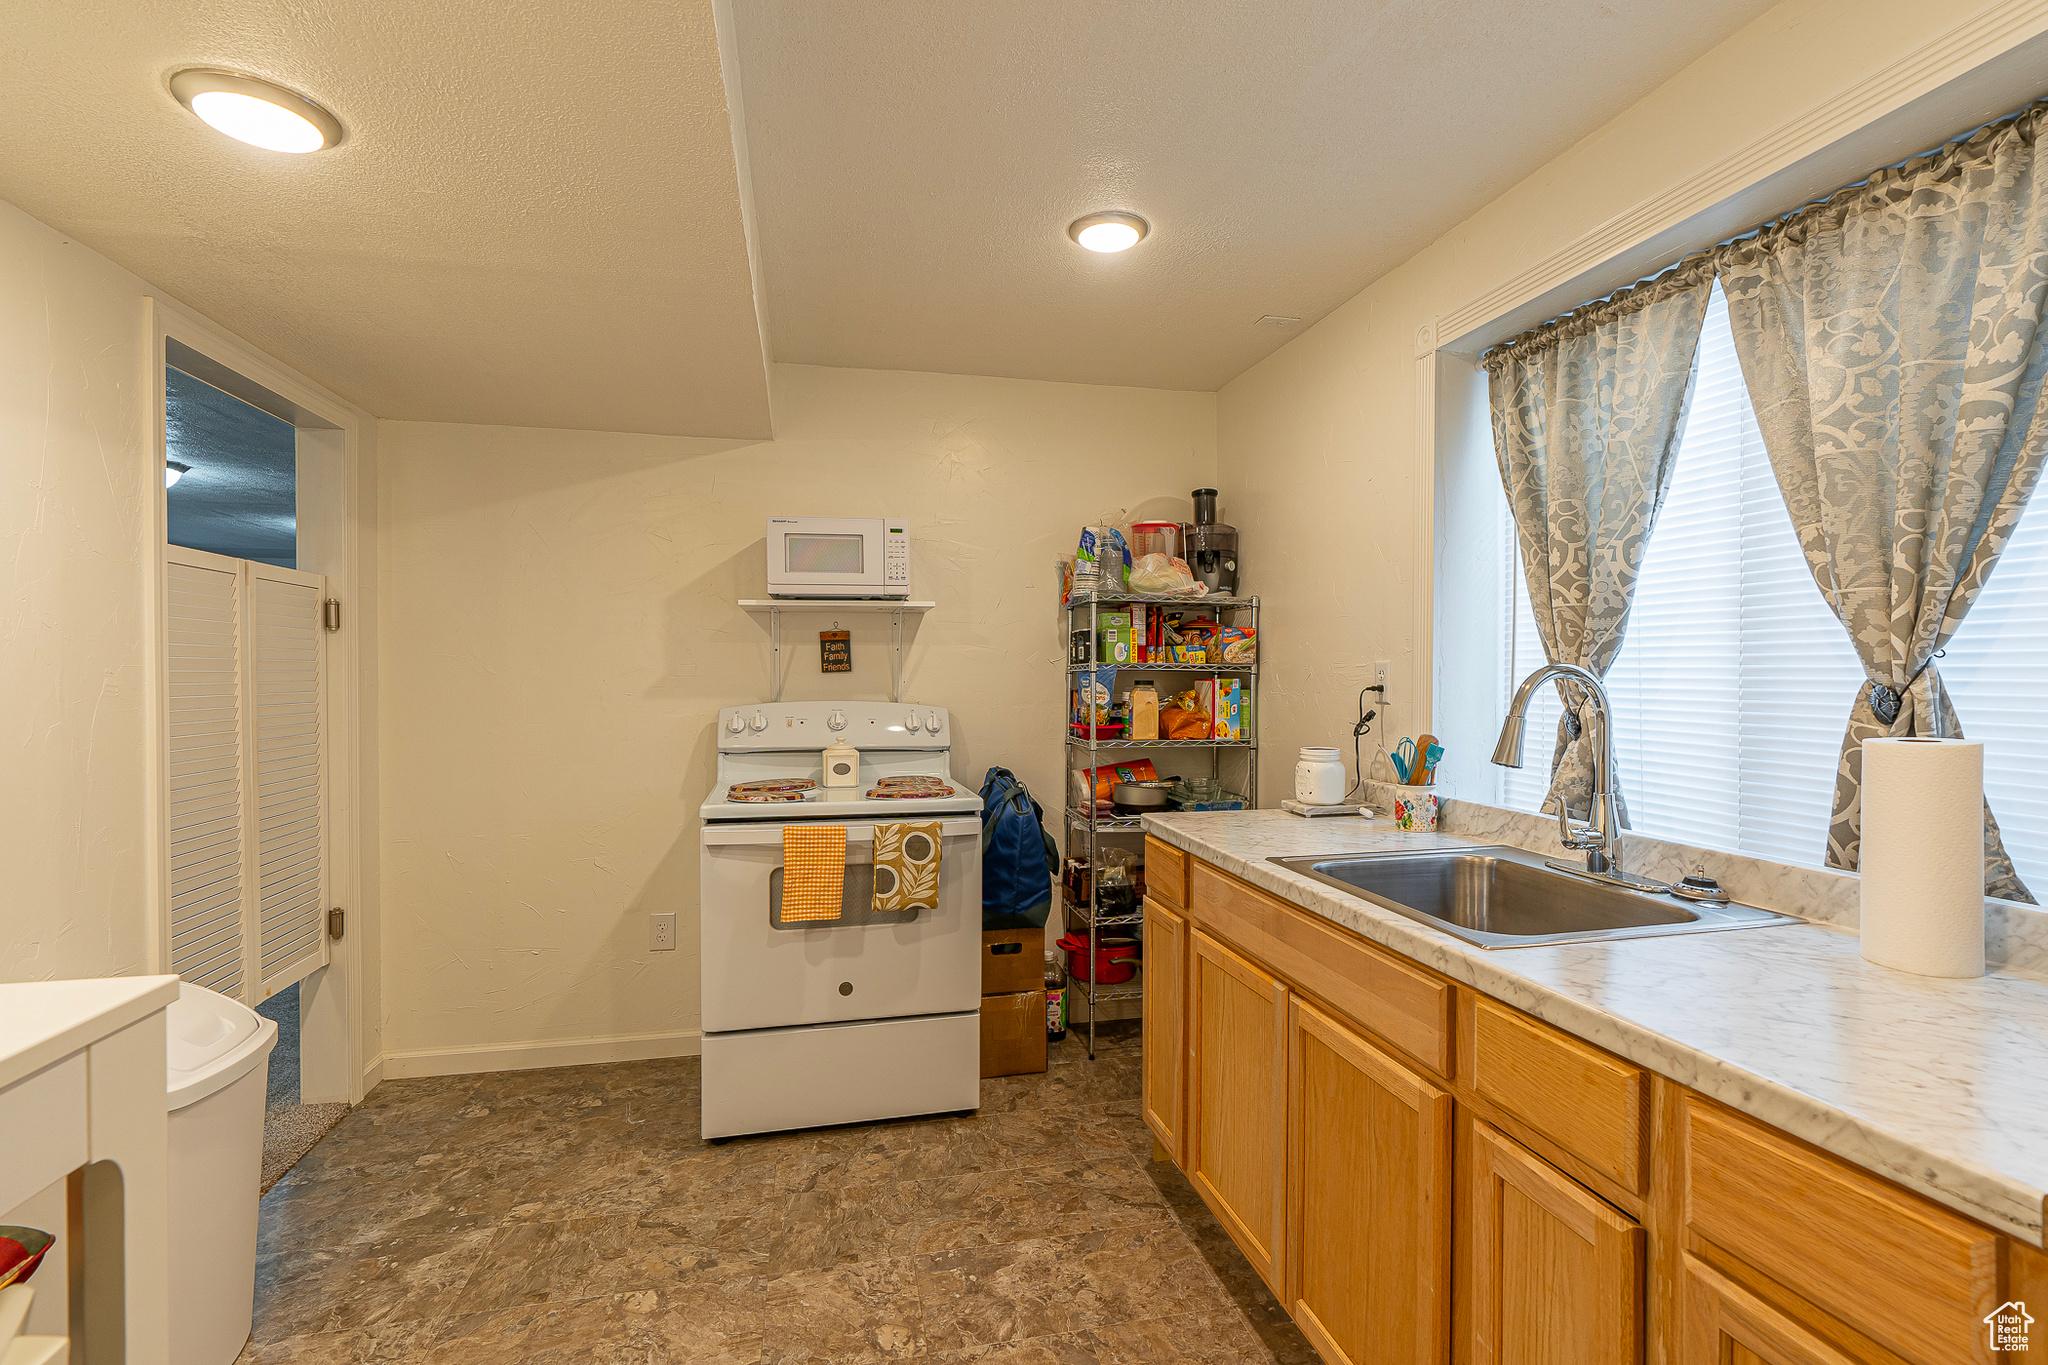 Kitchen with dark tile flooring, white appliances, and sink